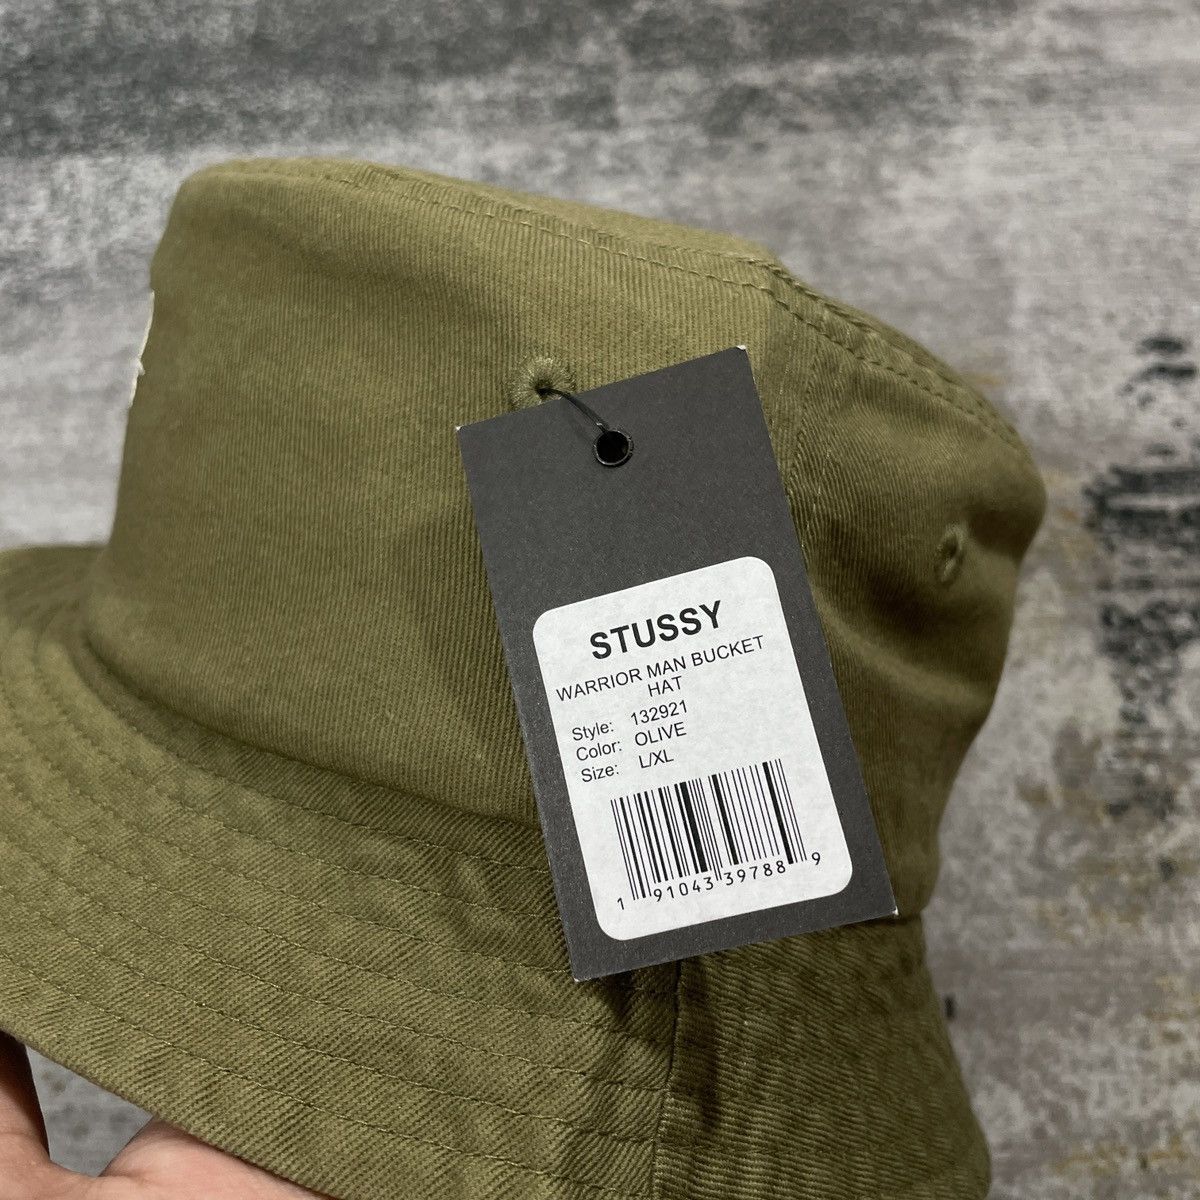 STUSSY WARRIOR MAN BUCKET HAT OLIVE - L/XL